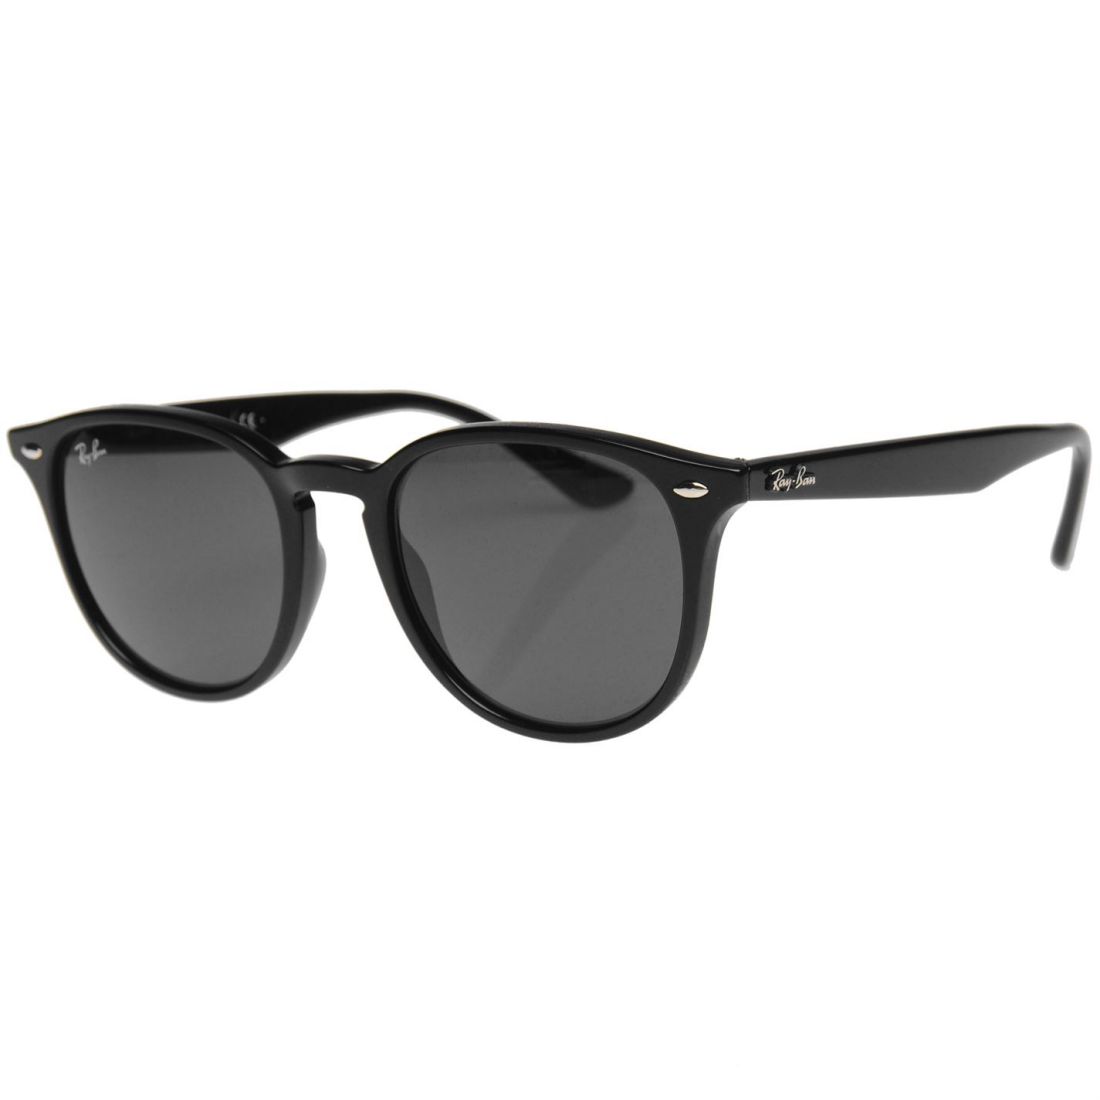 xxl wayfarer sunglasses